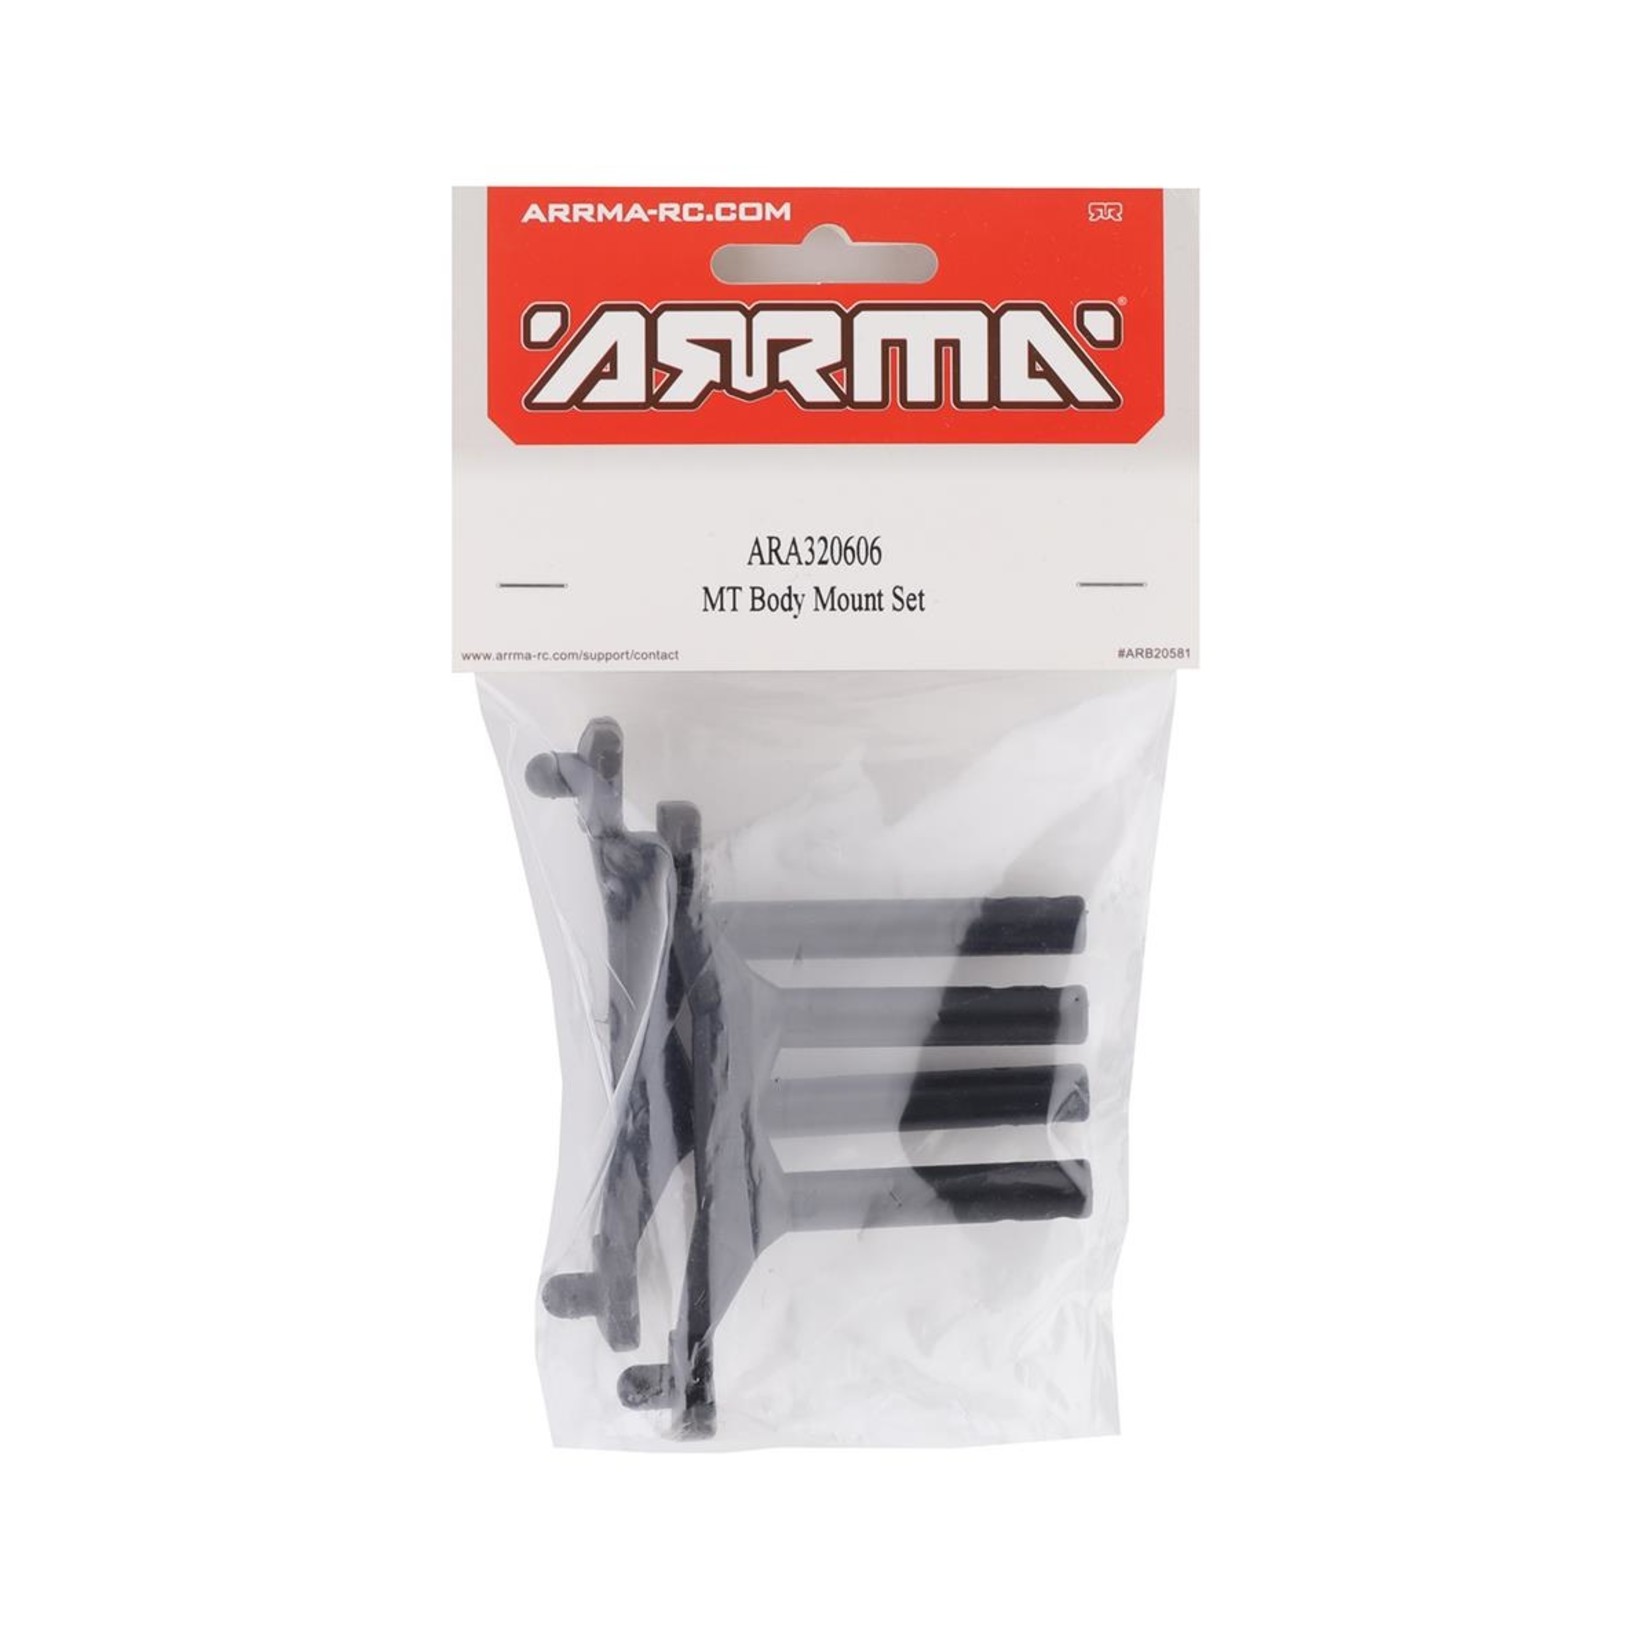 ARRMA Arrma Granite Mega/3S BLX Body Mount Set #ARA320606